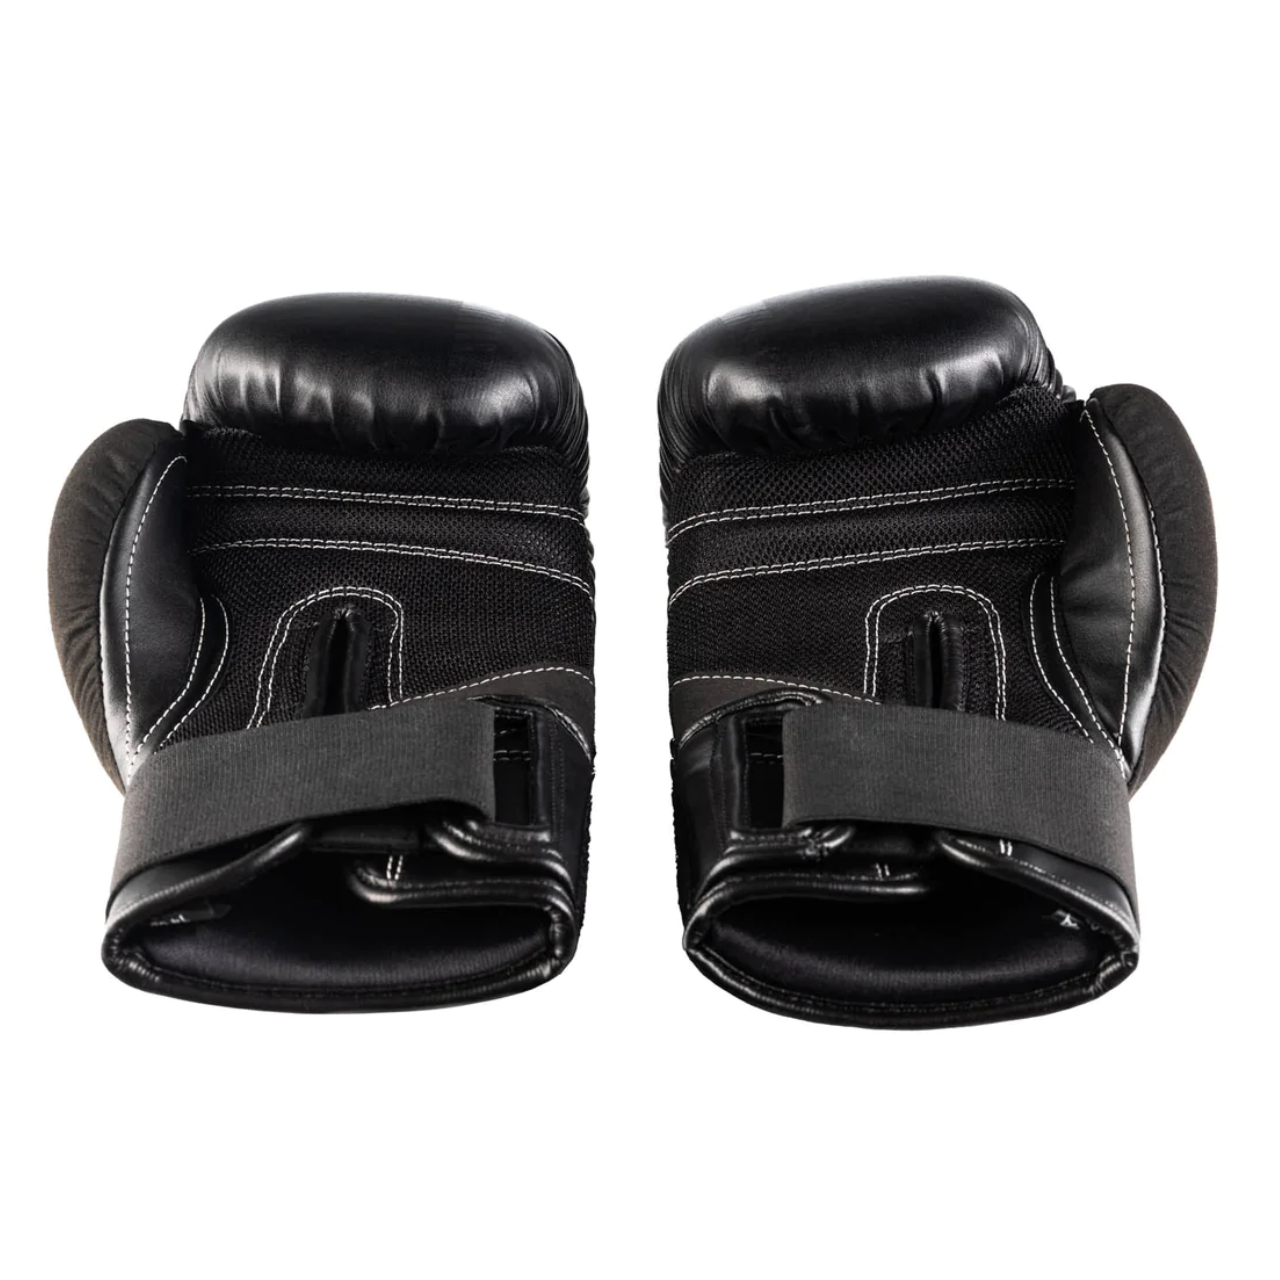 Reeva Boxing Gloves Leather, Black